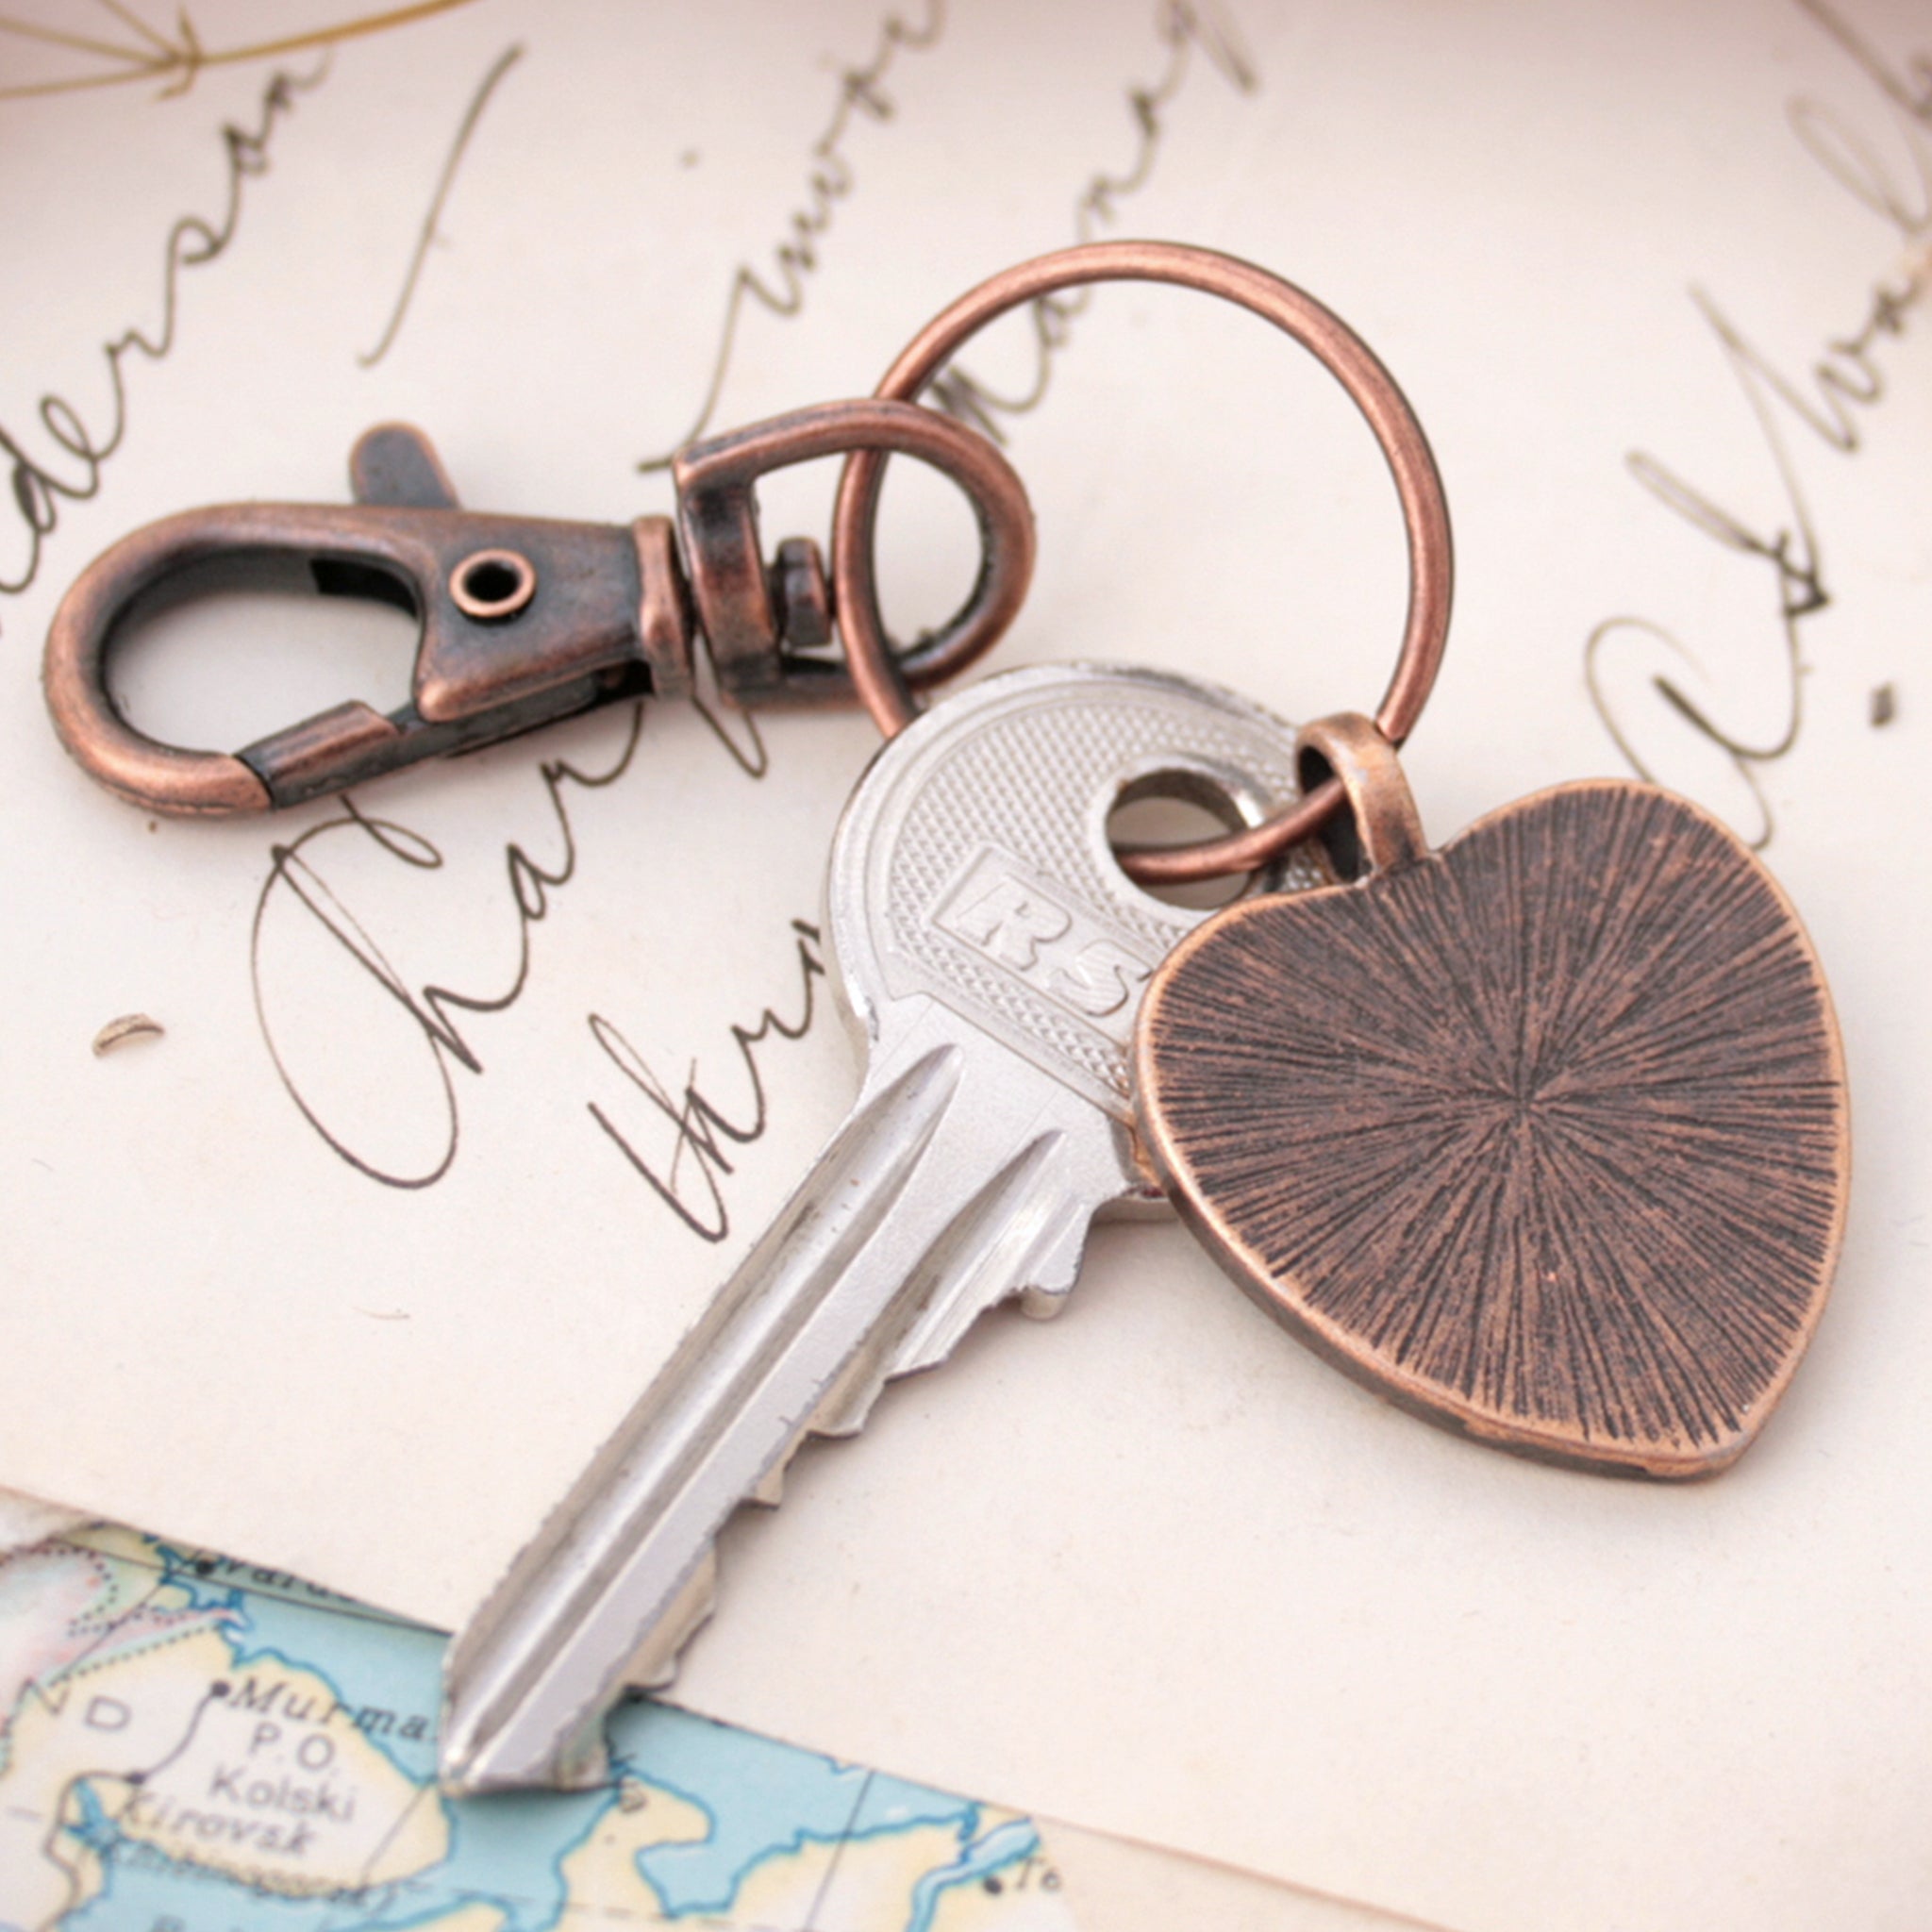 Heart shaped keychain in copper tone